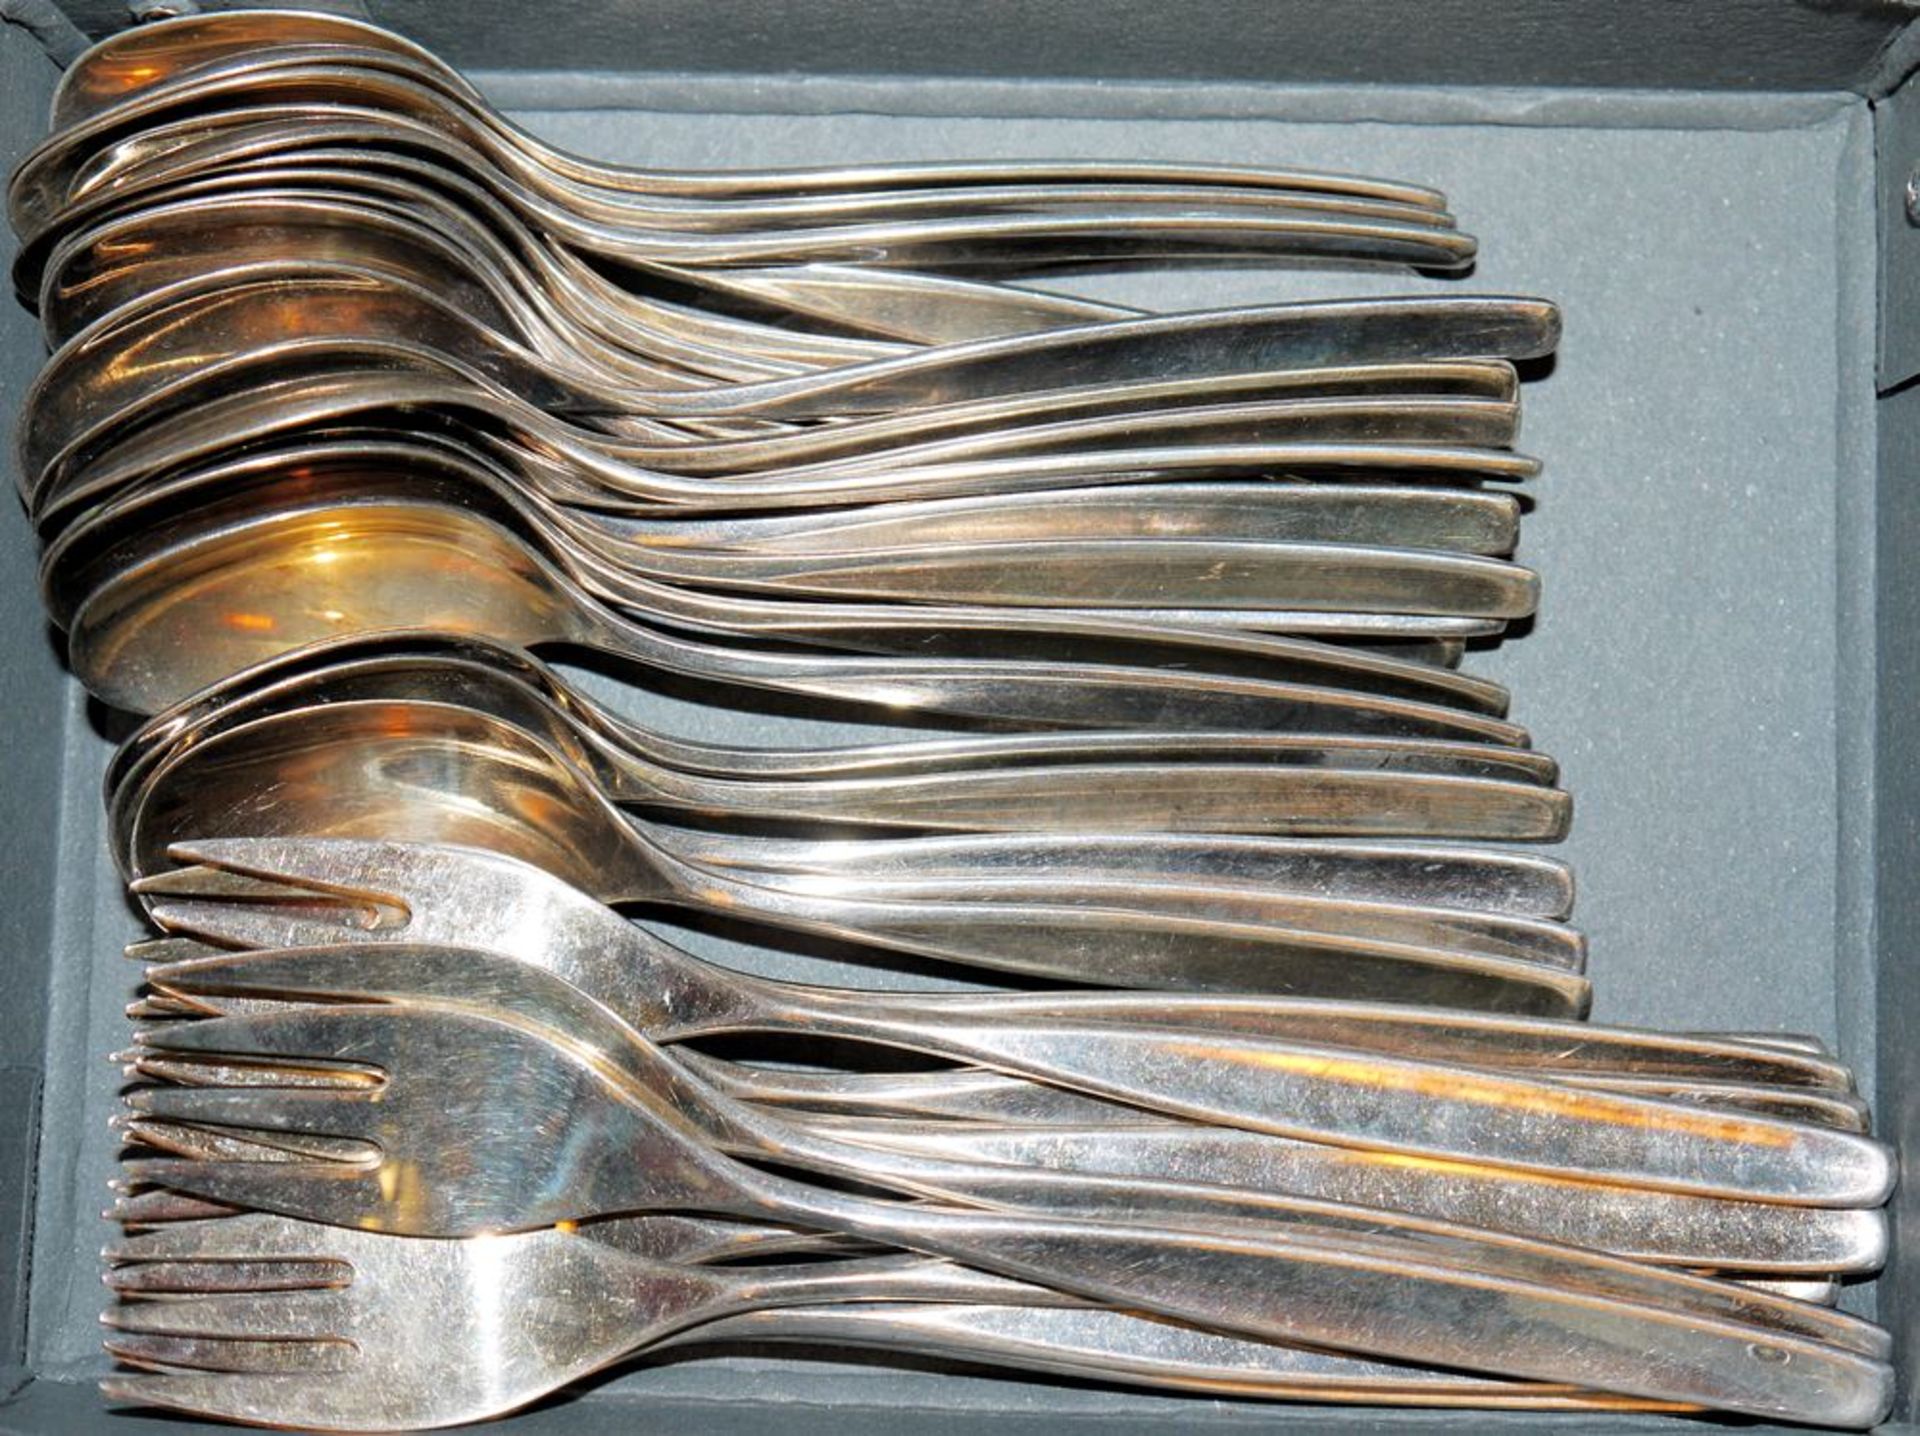 Remainder cutlery "Barcelona" WMF, silver